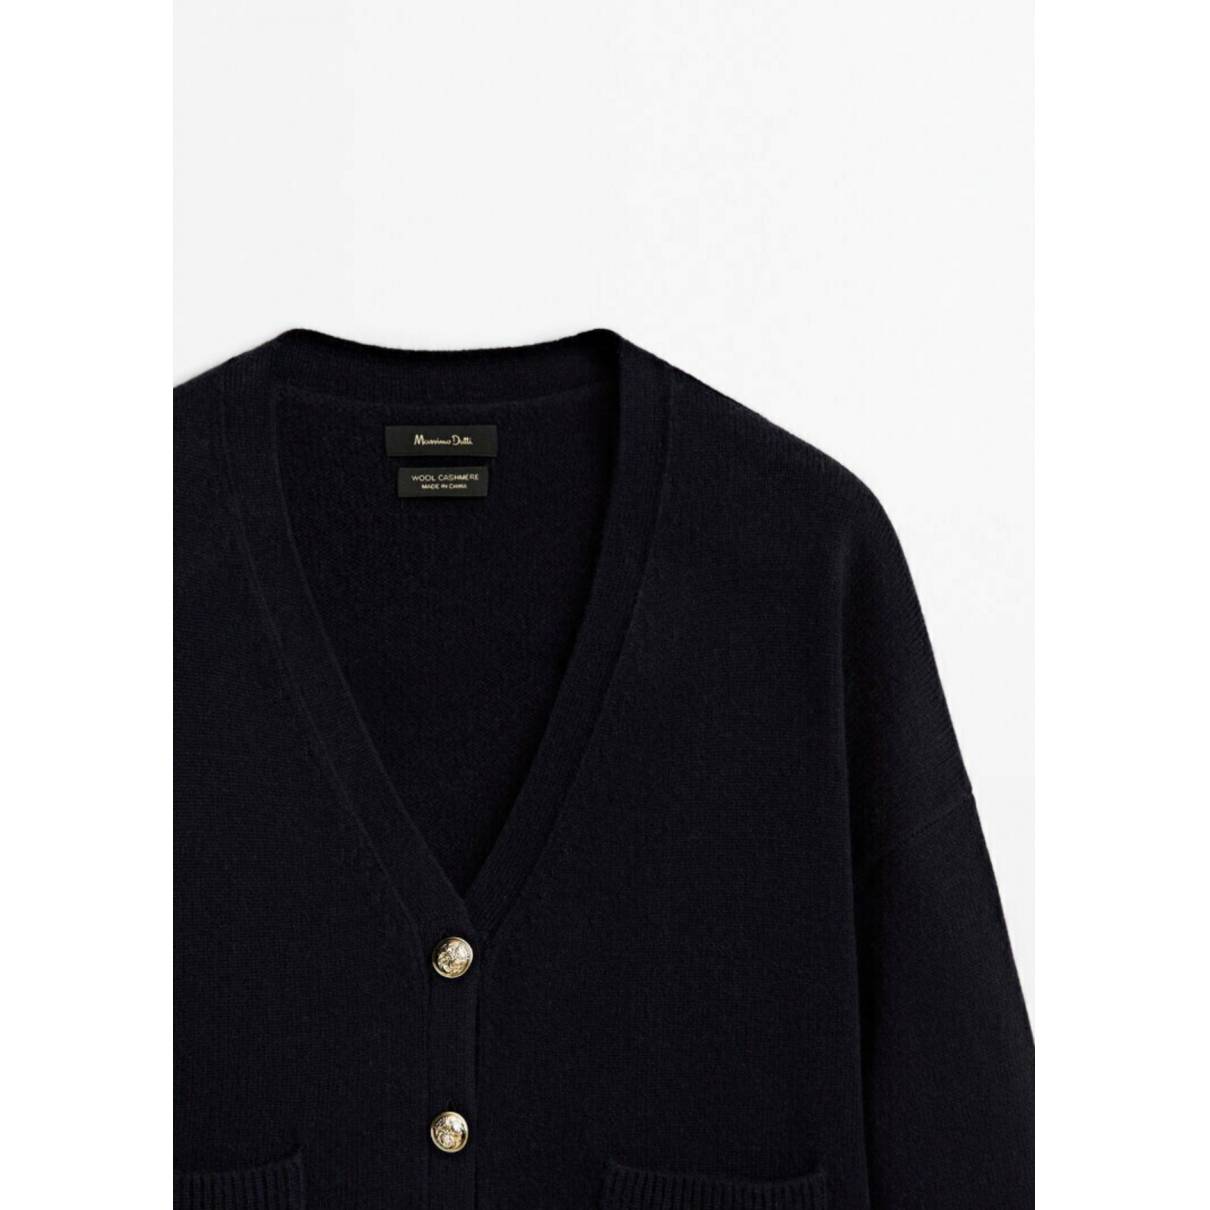 Buy Massimo Dutti Wool cardigan online